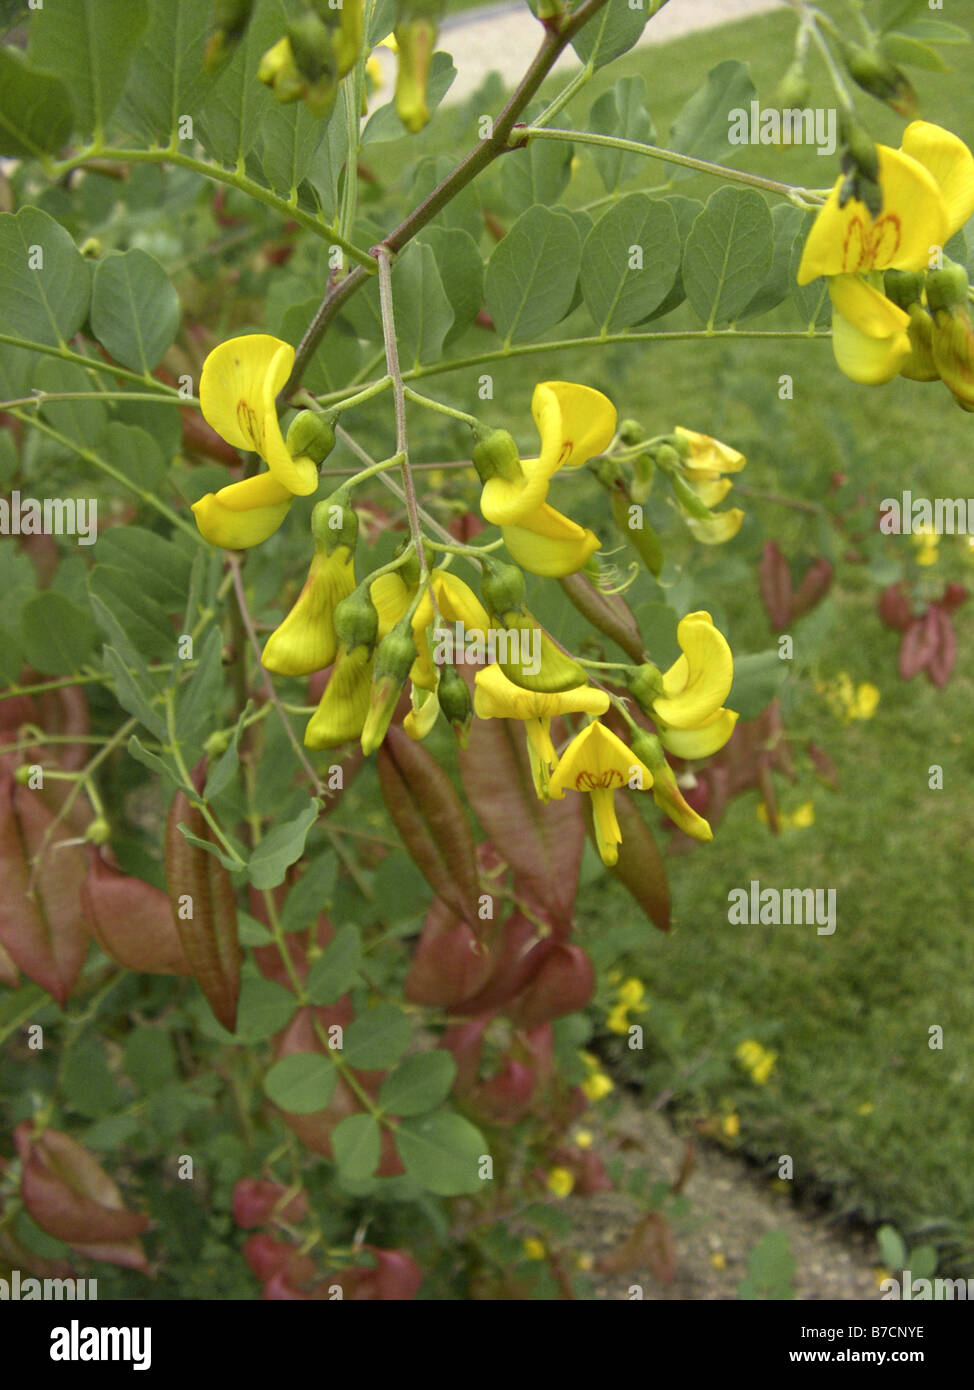 bladder senna, bladder-senna (Colutea arborescens), with flowers and fruits Stock Photo